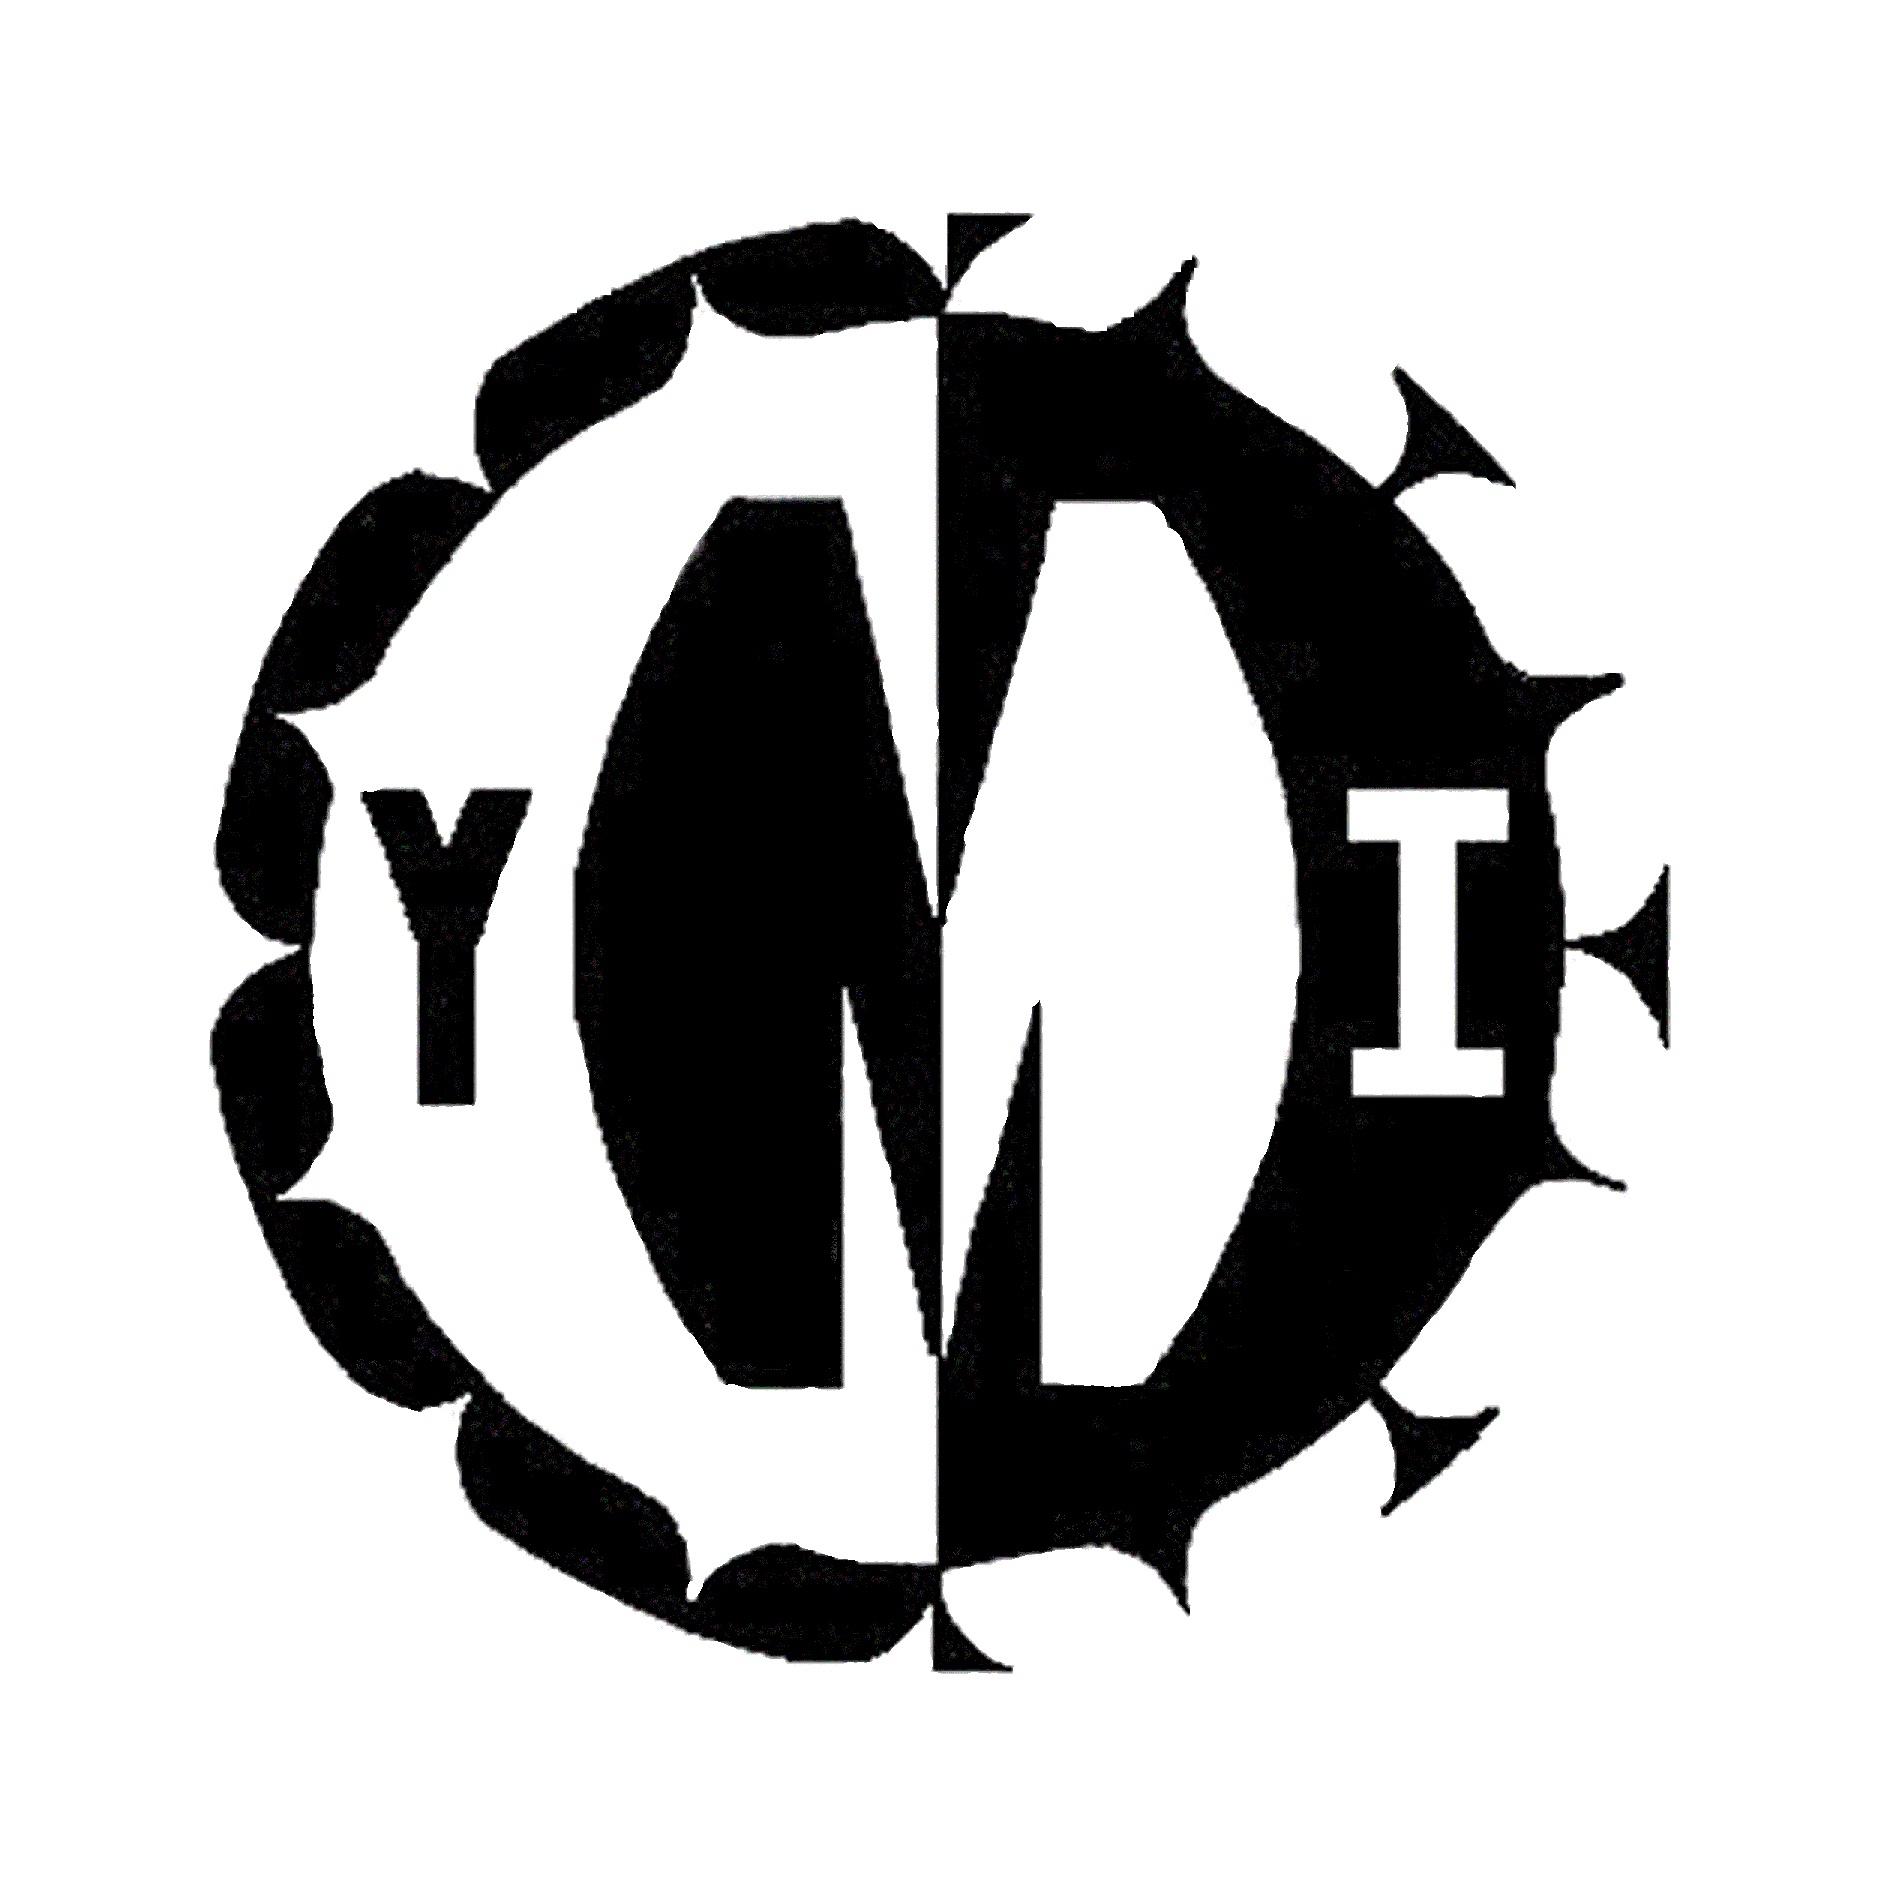 YMI's logo